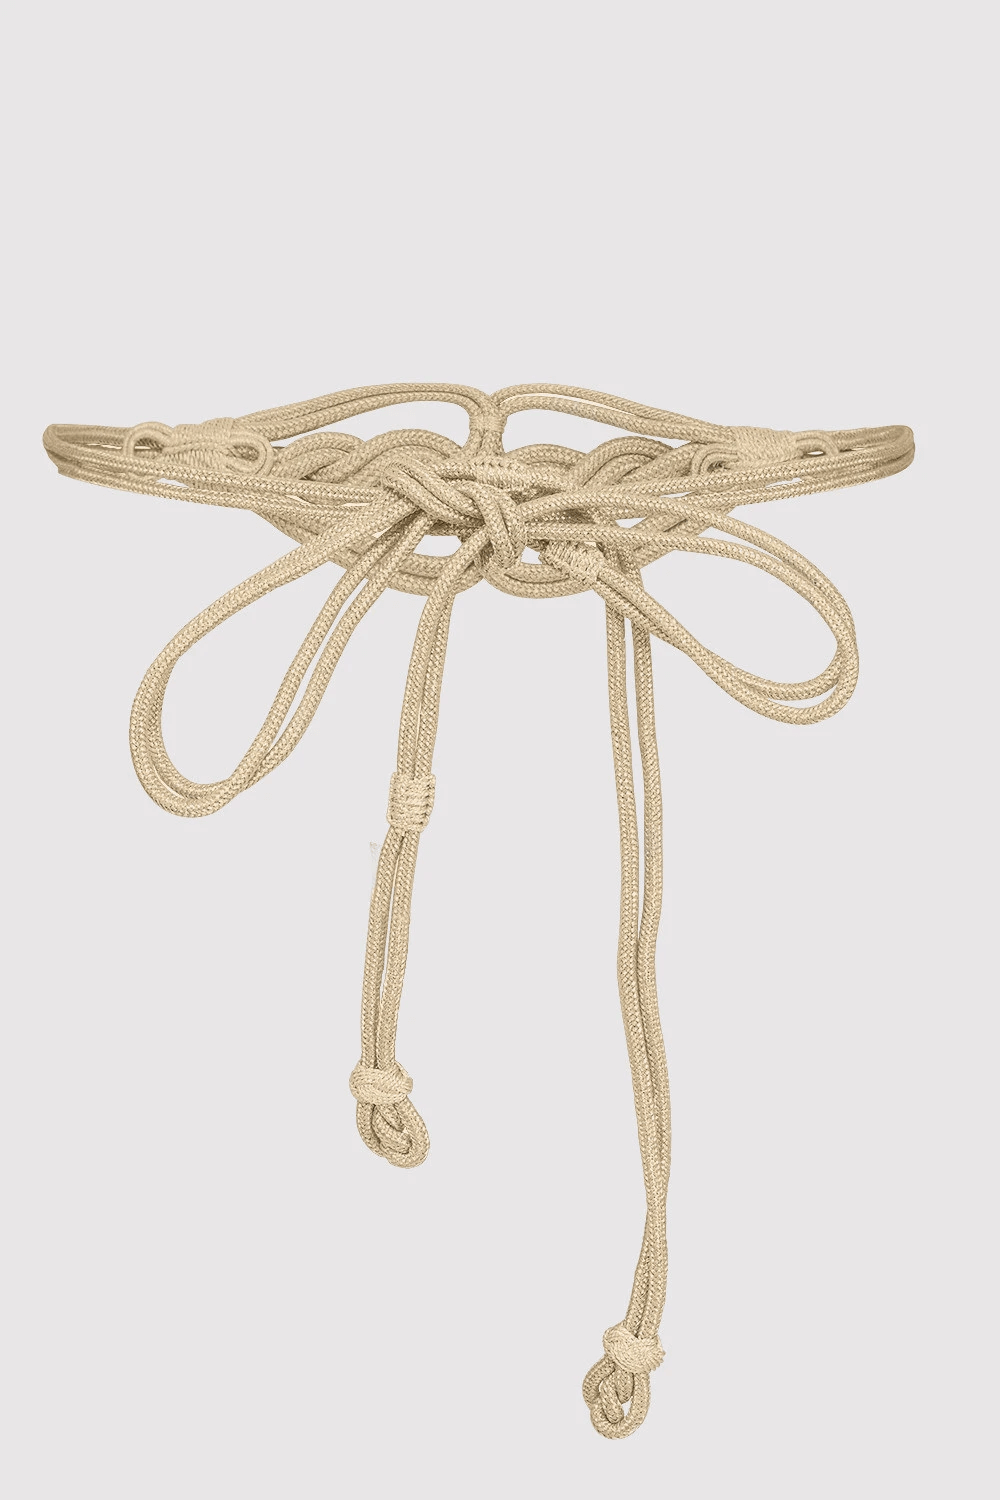 Razal Metallic Braided Rope Belt in Cartier